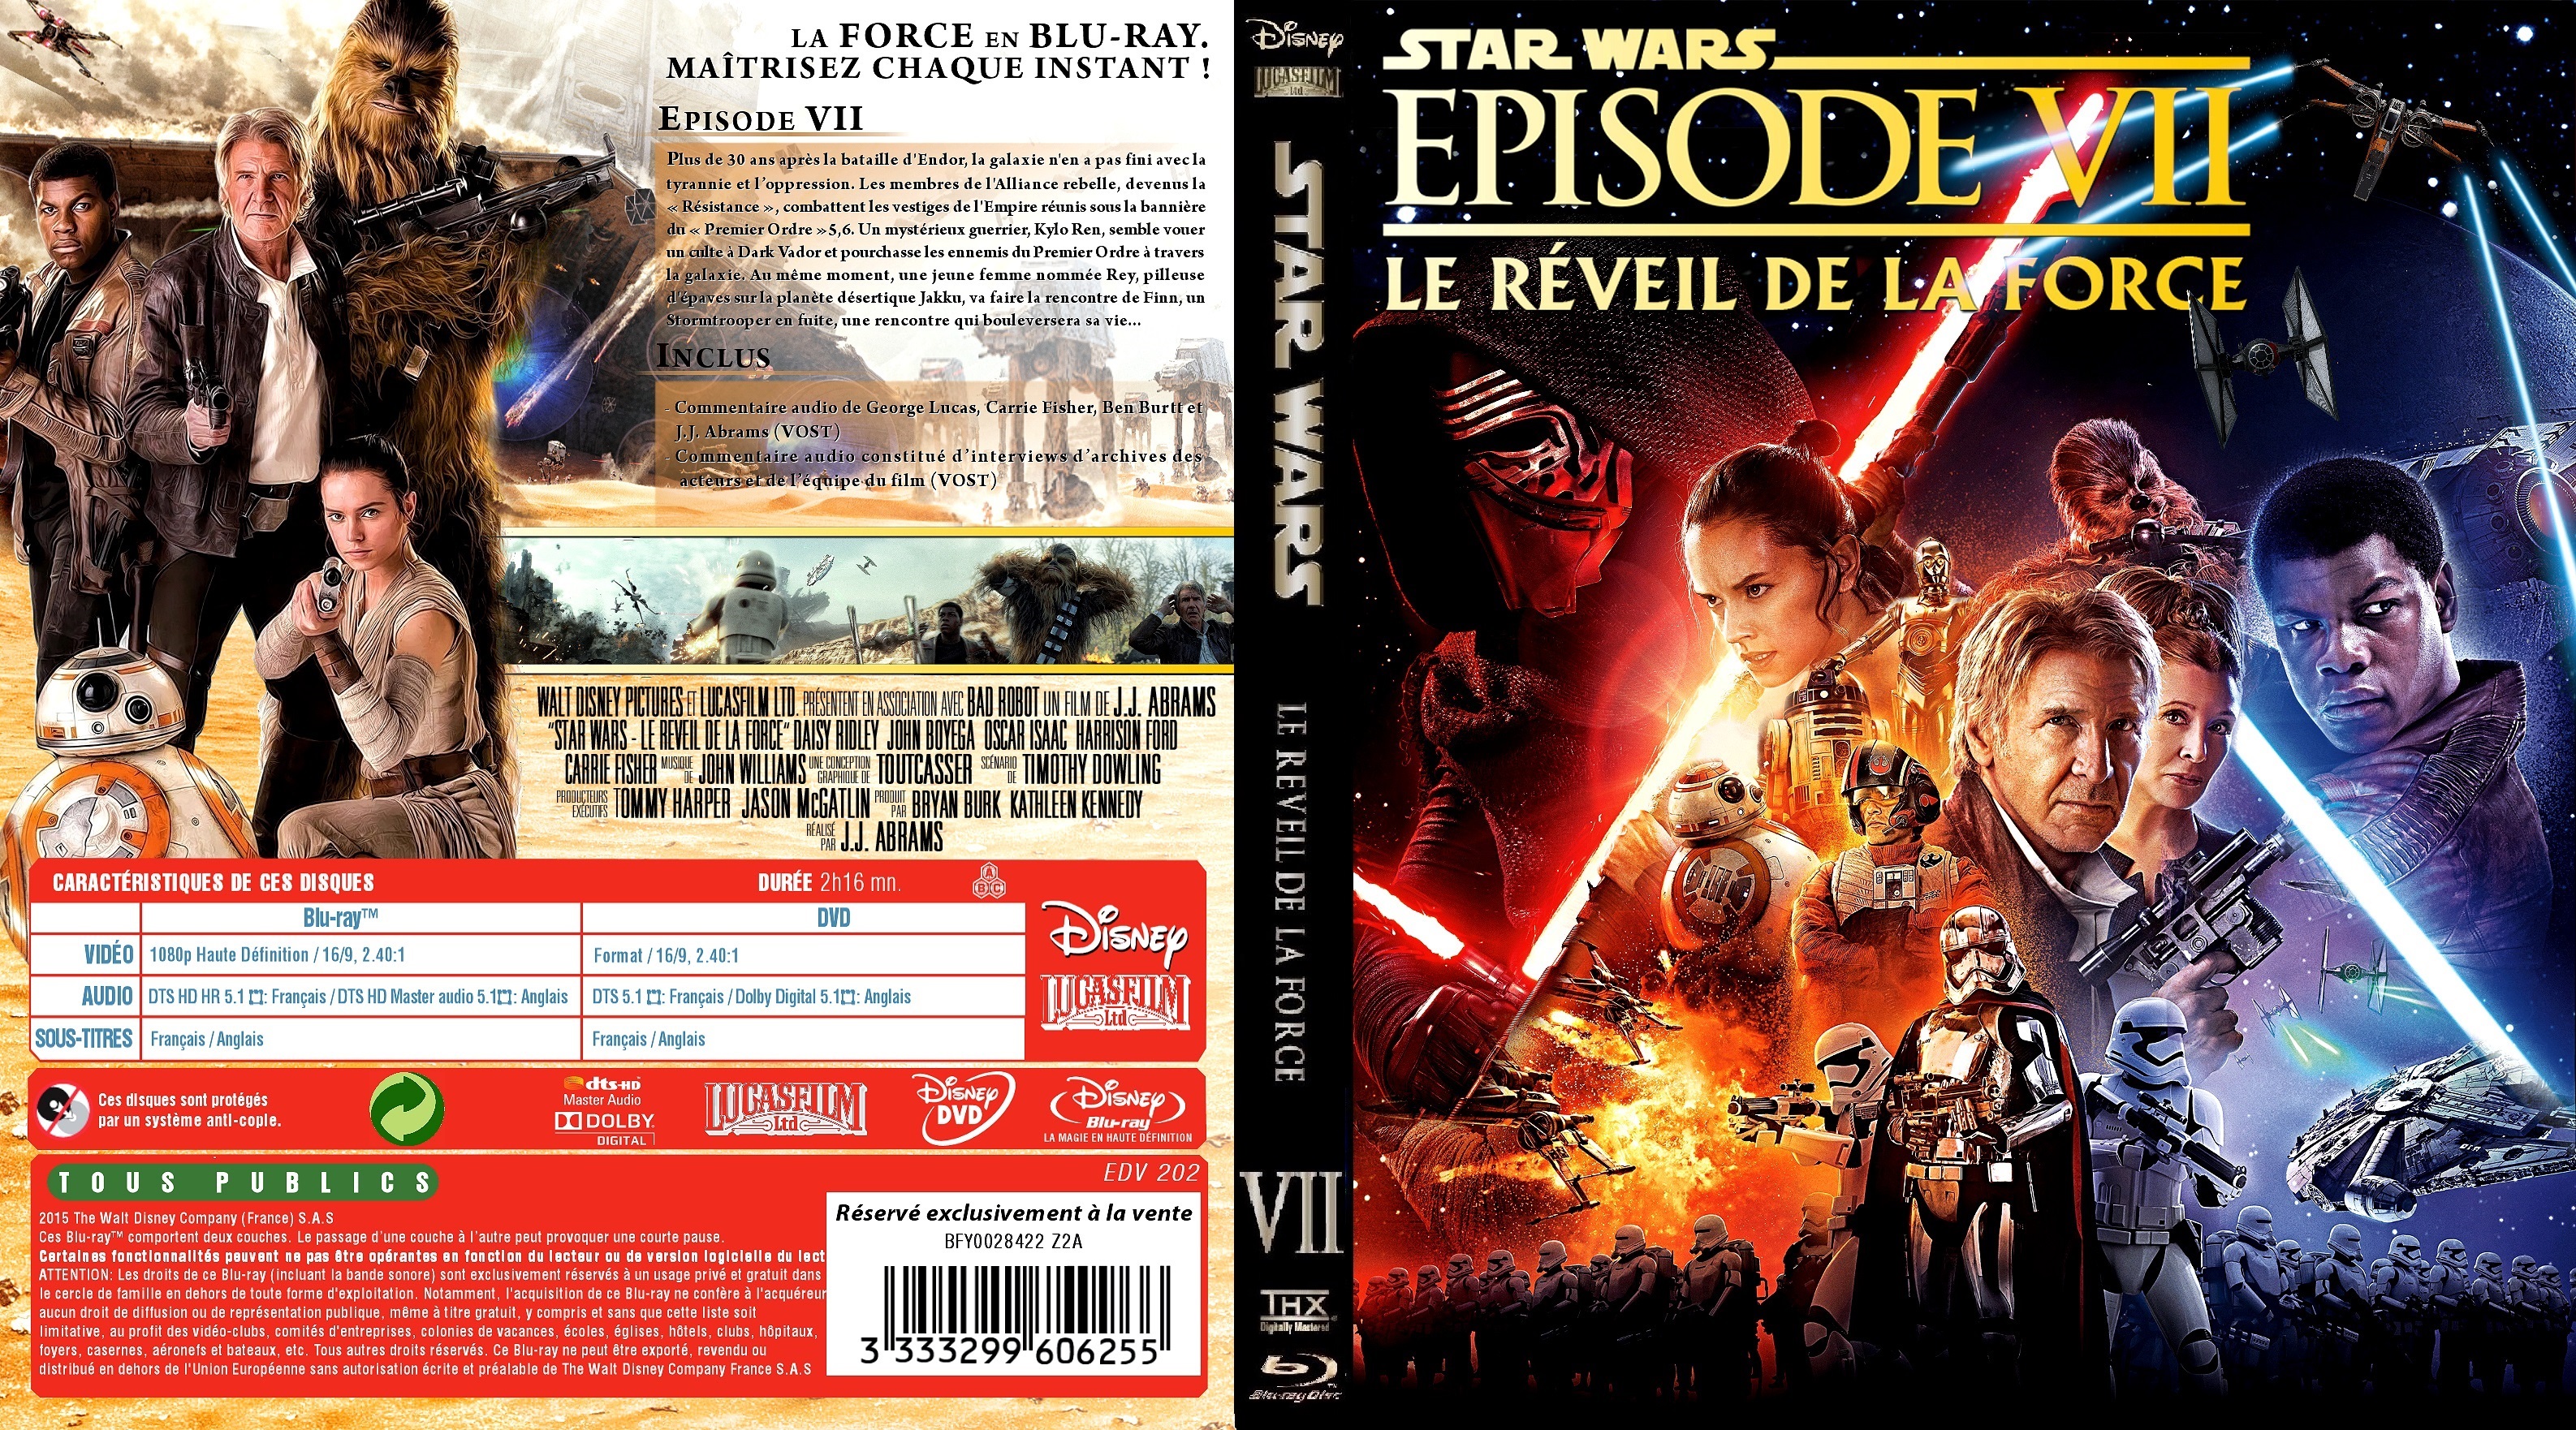 Jaquette DVD Star Wars: Episode VII Le rveil de la force custom (BLU-RAY) v2